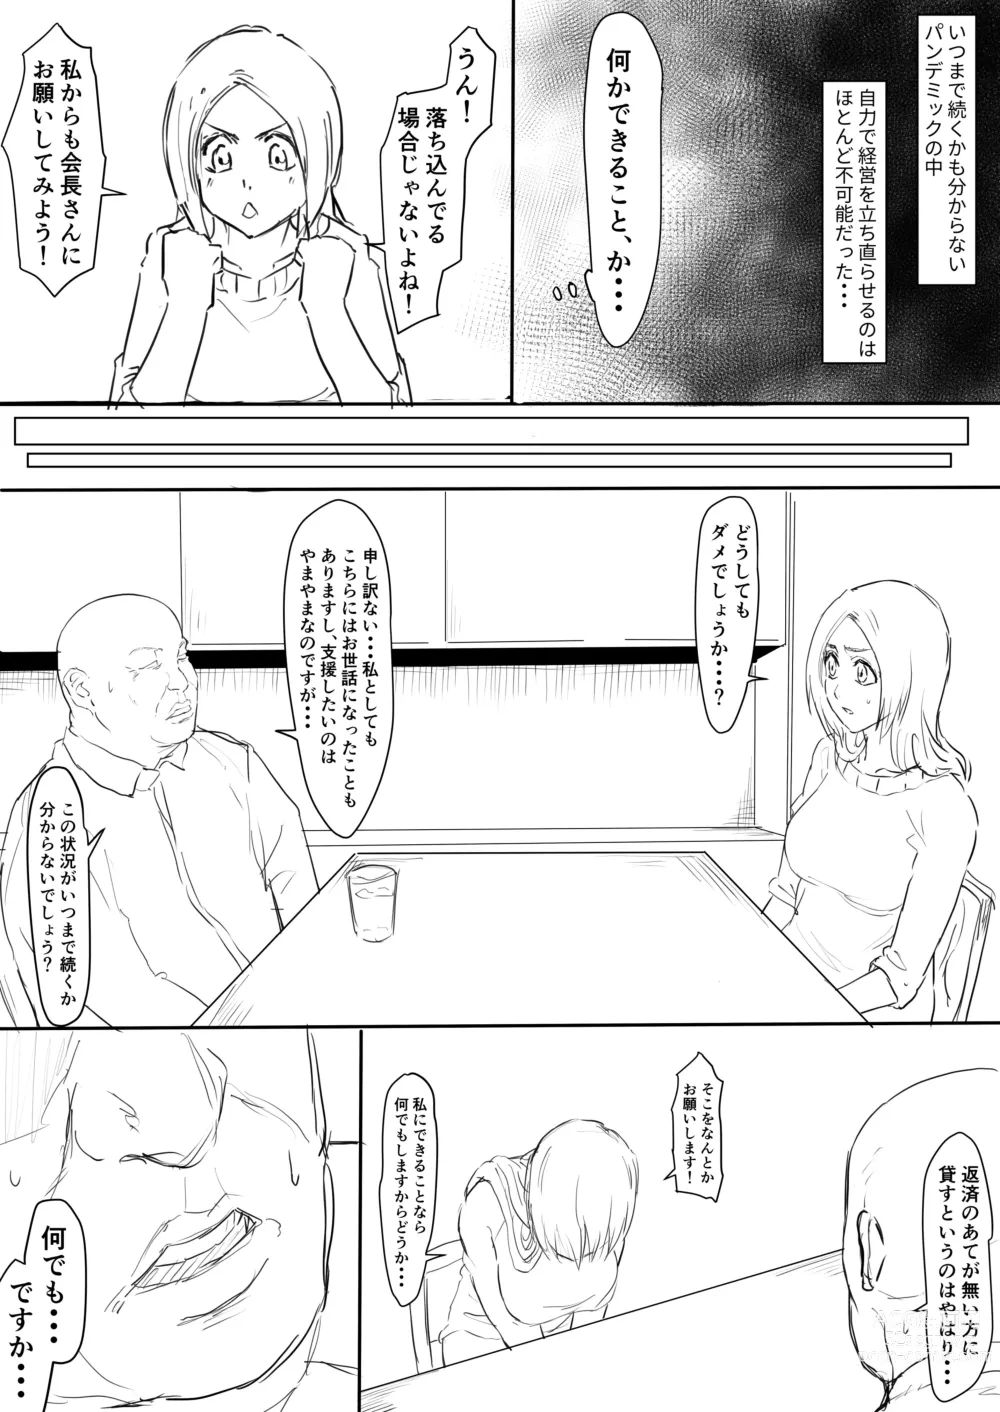 Page 2 of doujinshi Orihime Manga Updated 7/2022